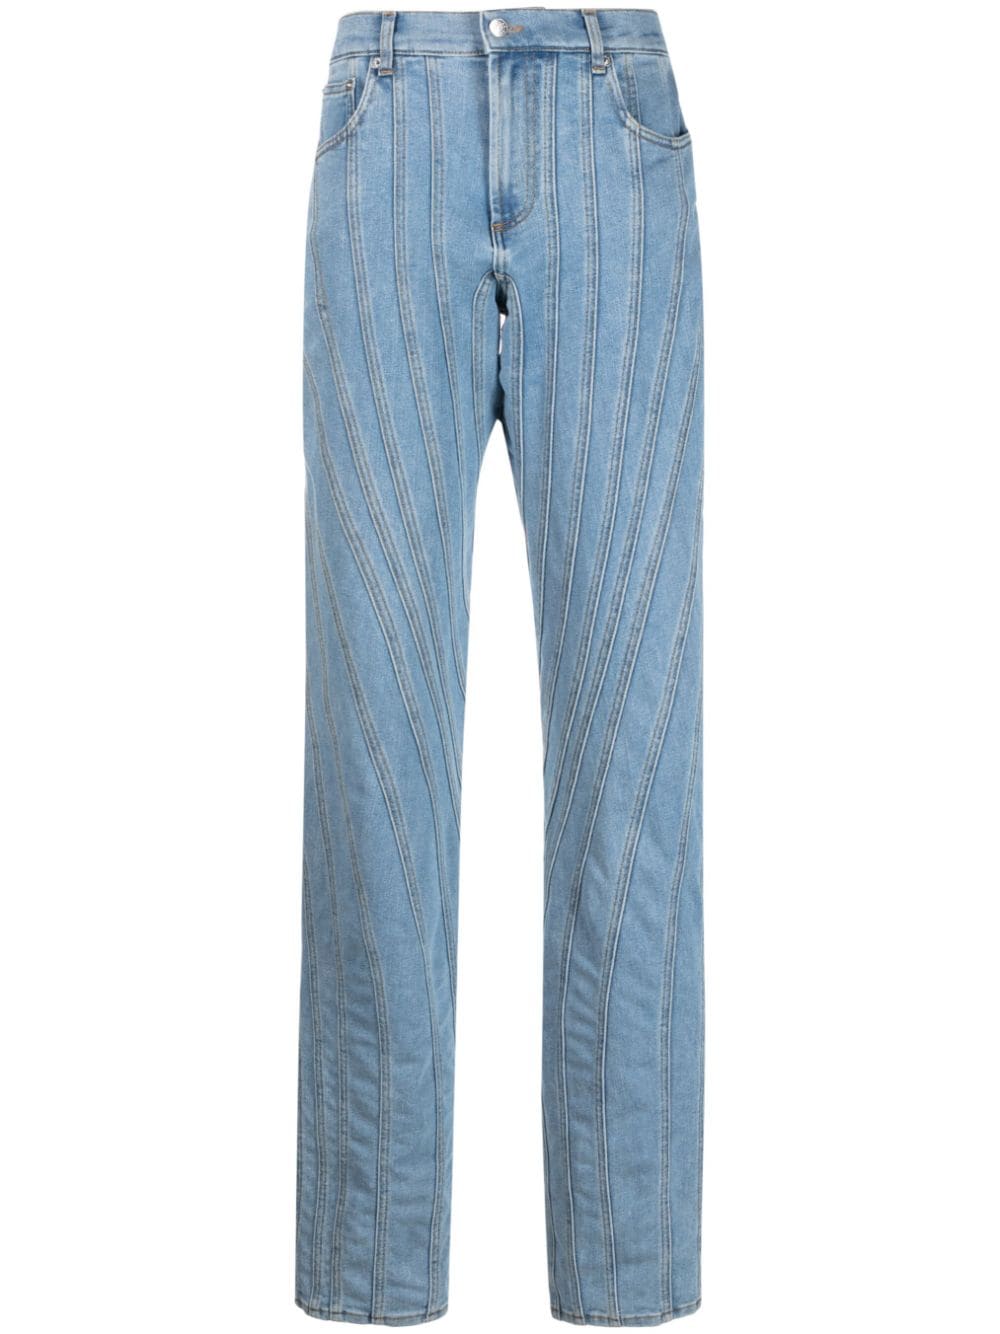 Mugler Jeans Clear Blue-women>clothing>jeans>classic-Mugler-Urbanheer